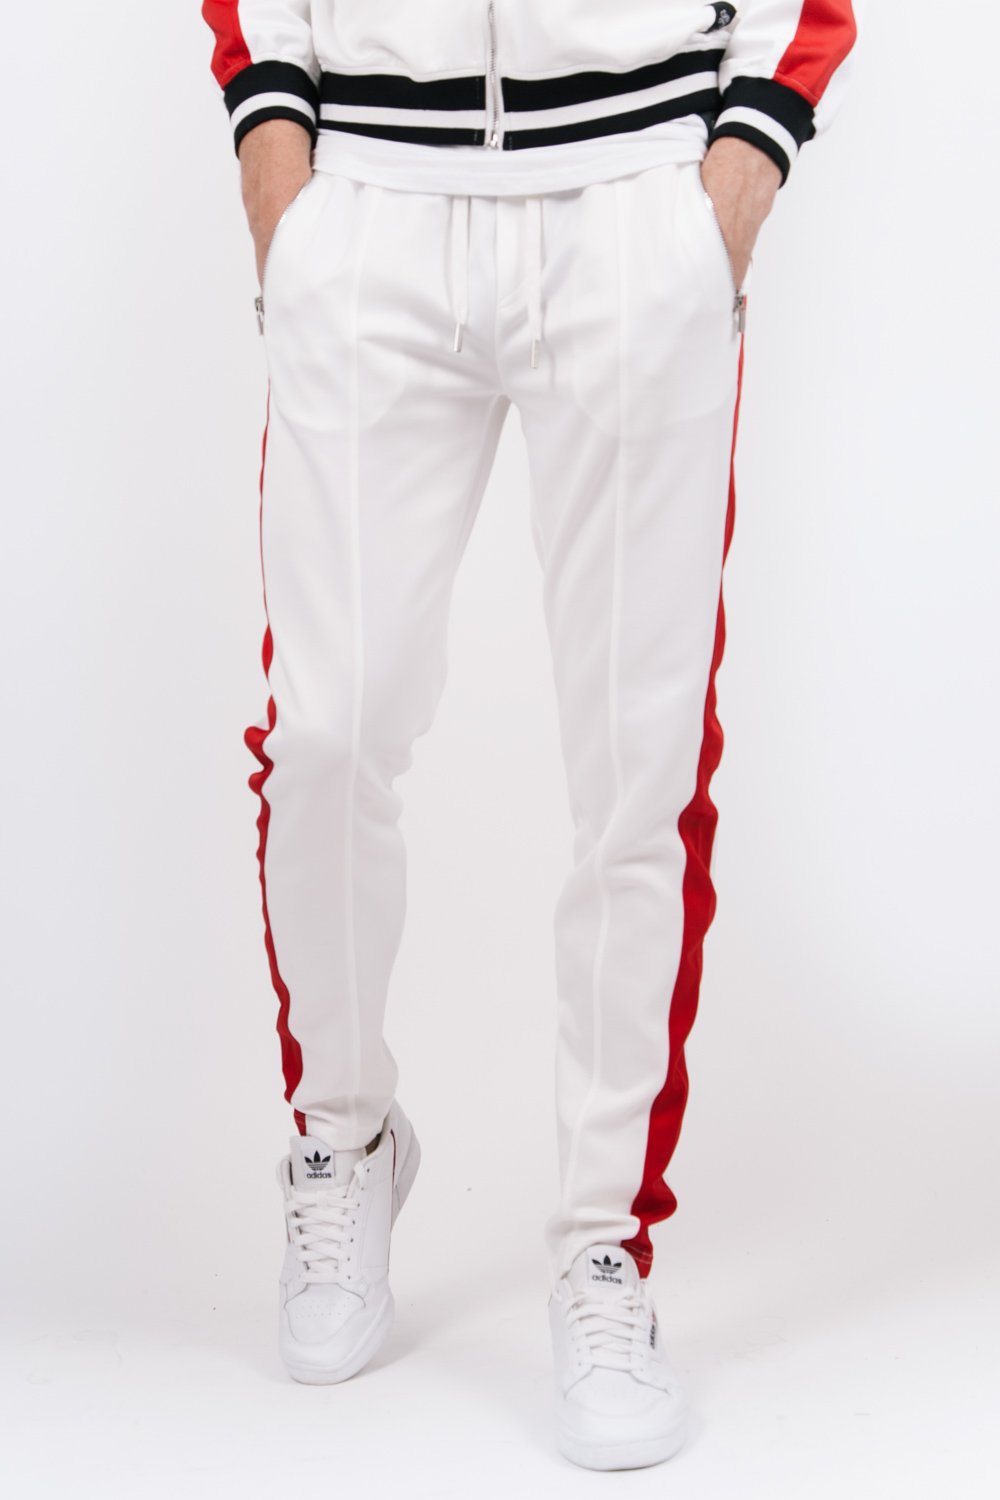 Jogging bicolores zips blanc rouge